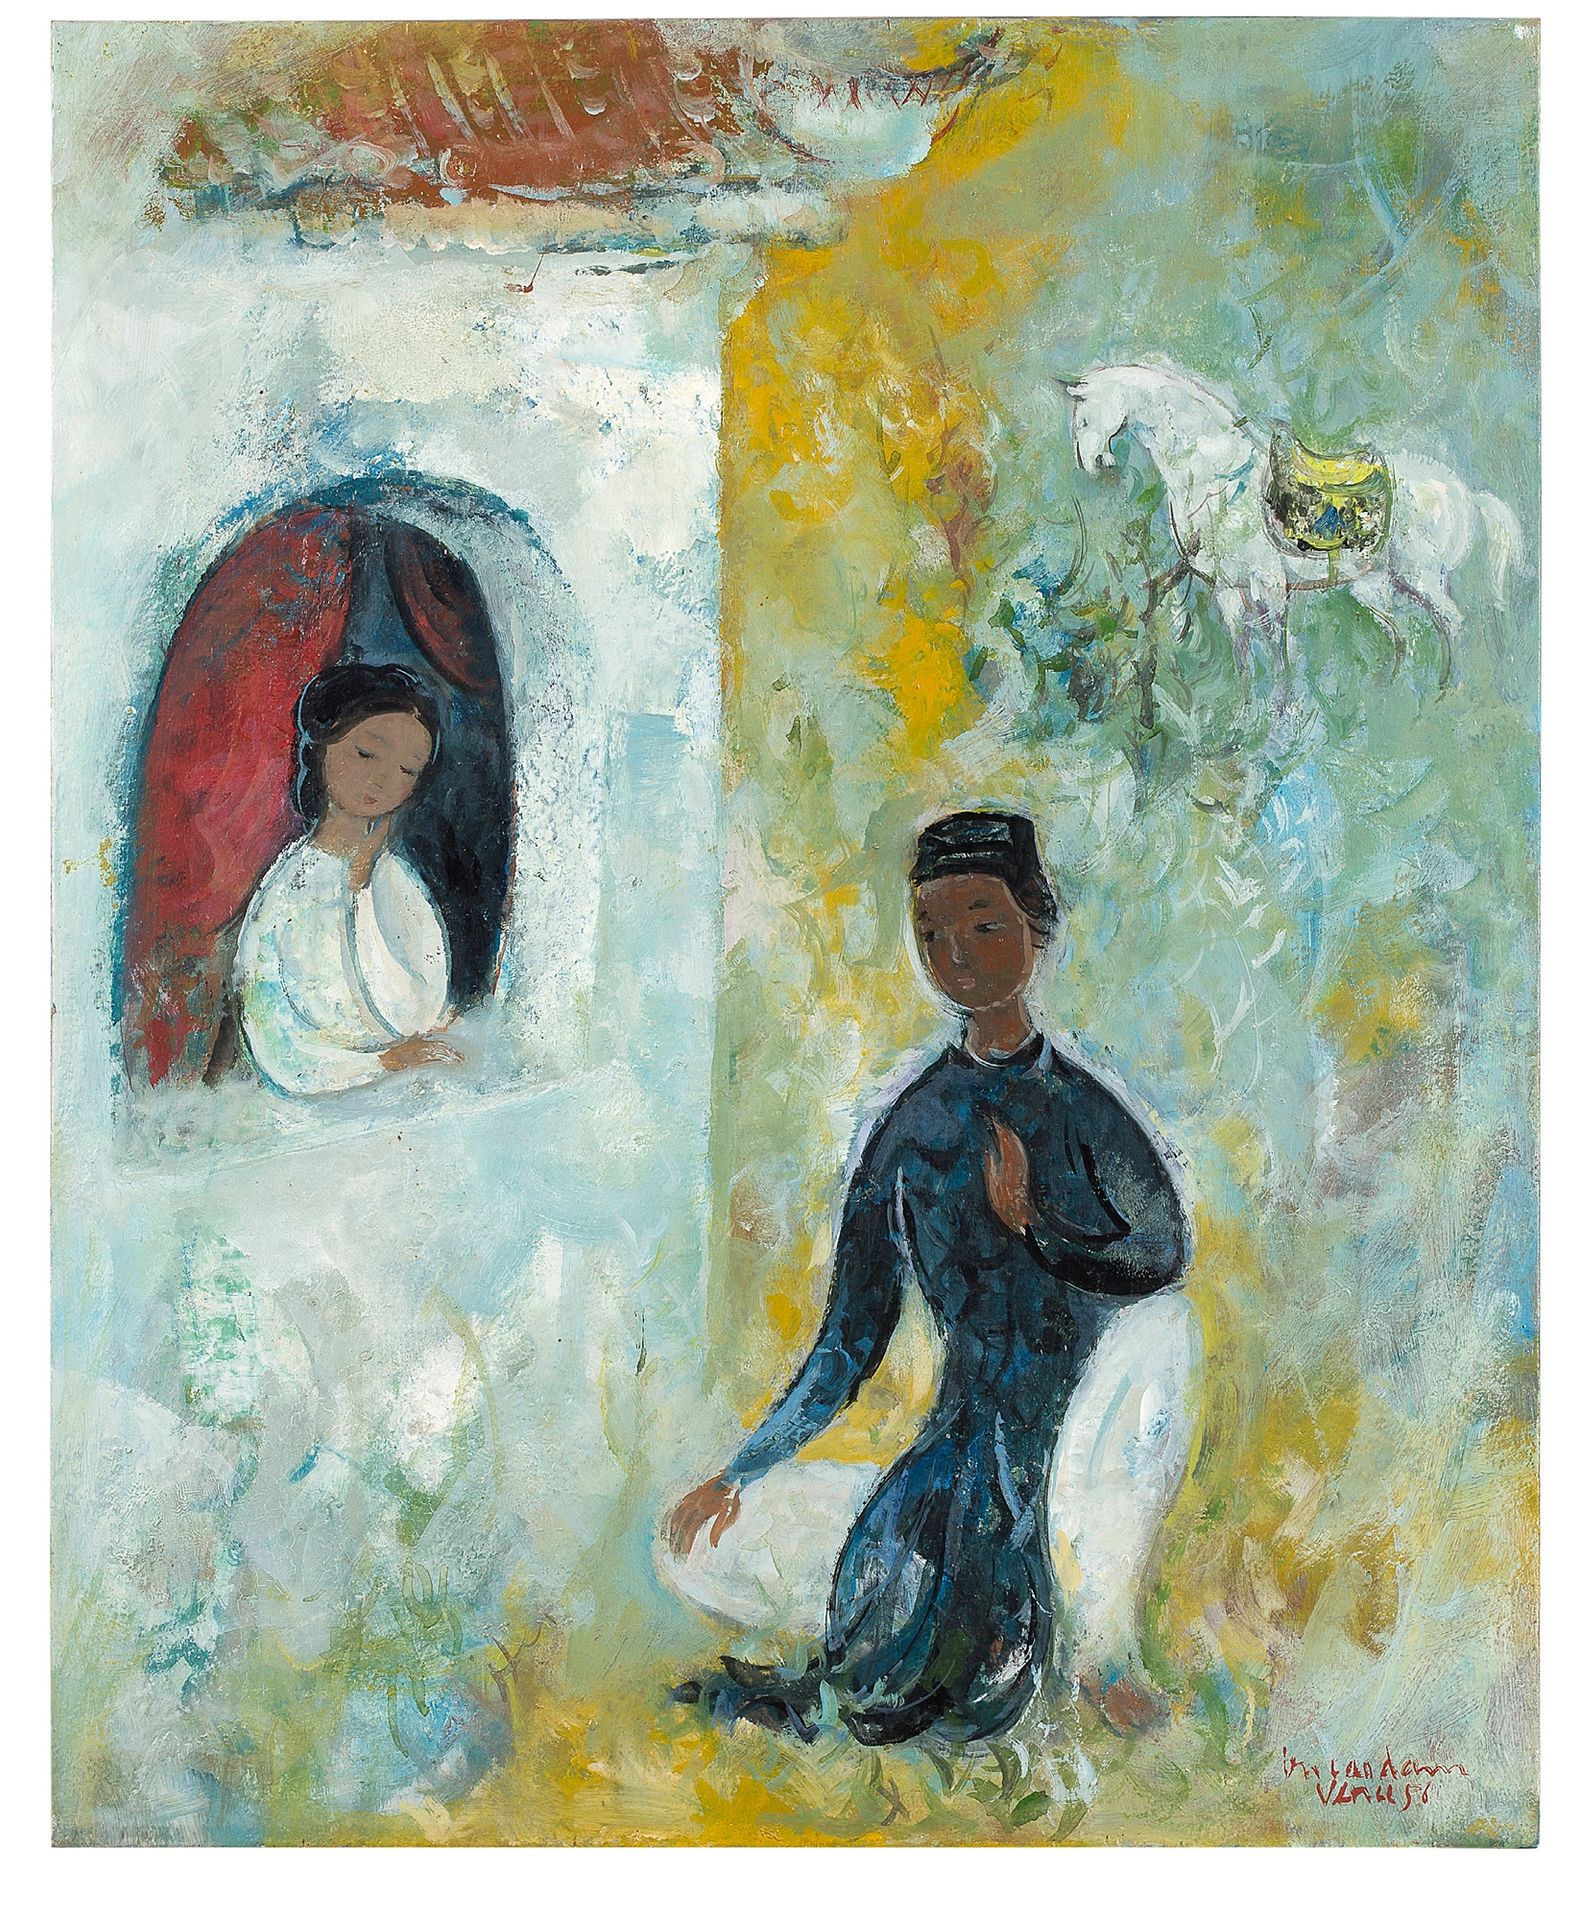 * Vu Cao Dam (1908-2000) 
《相会》，1956年

面板油画，右下角有签名、位置和日期 

61.5 x 49.5 cm - 24 1/&hellip;